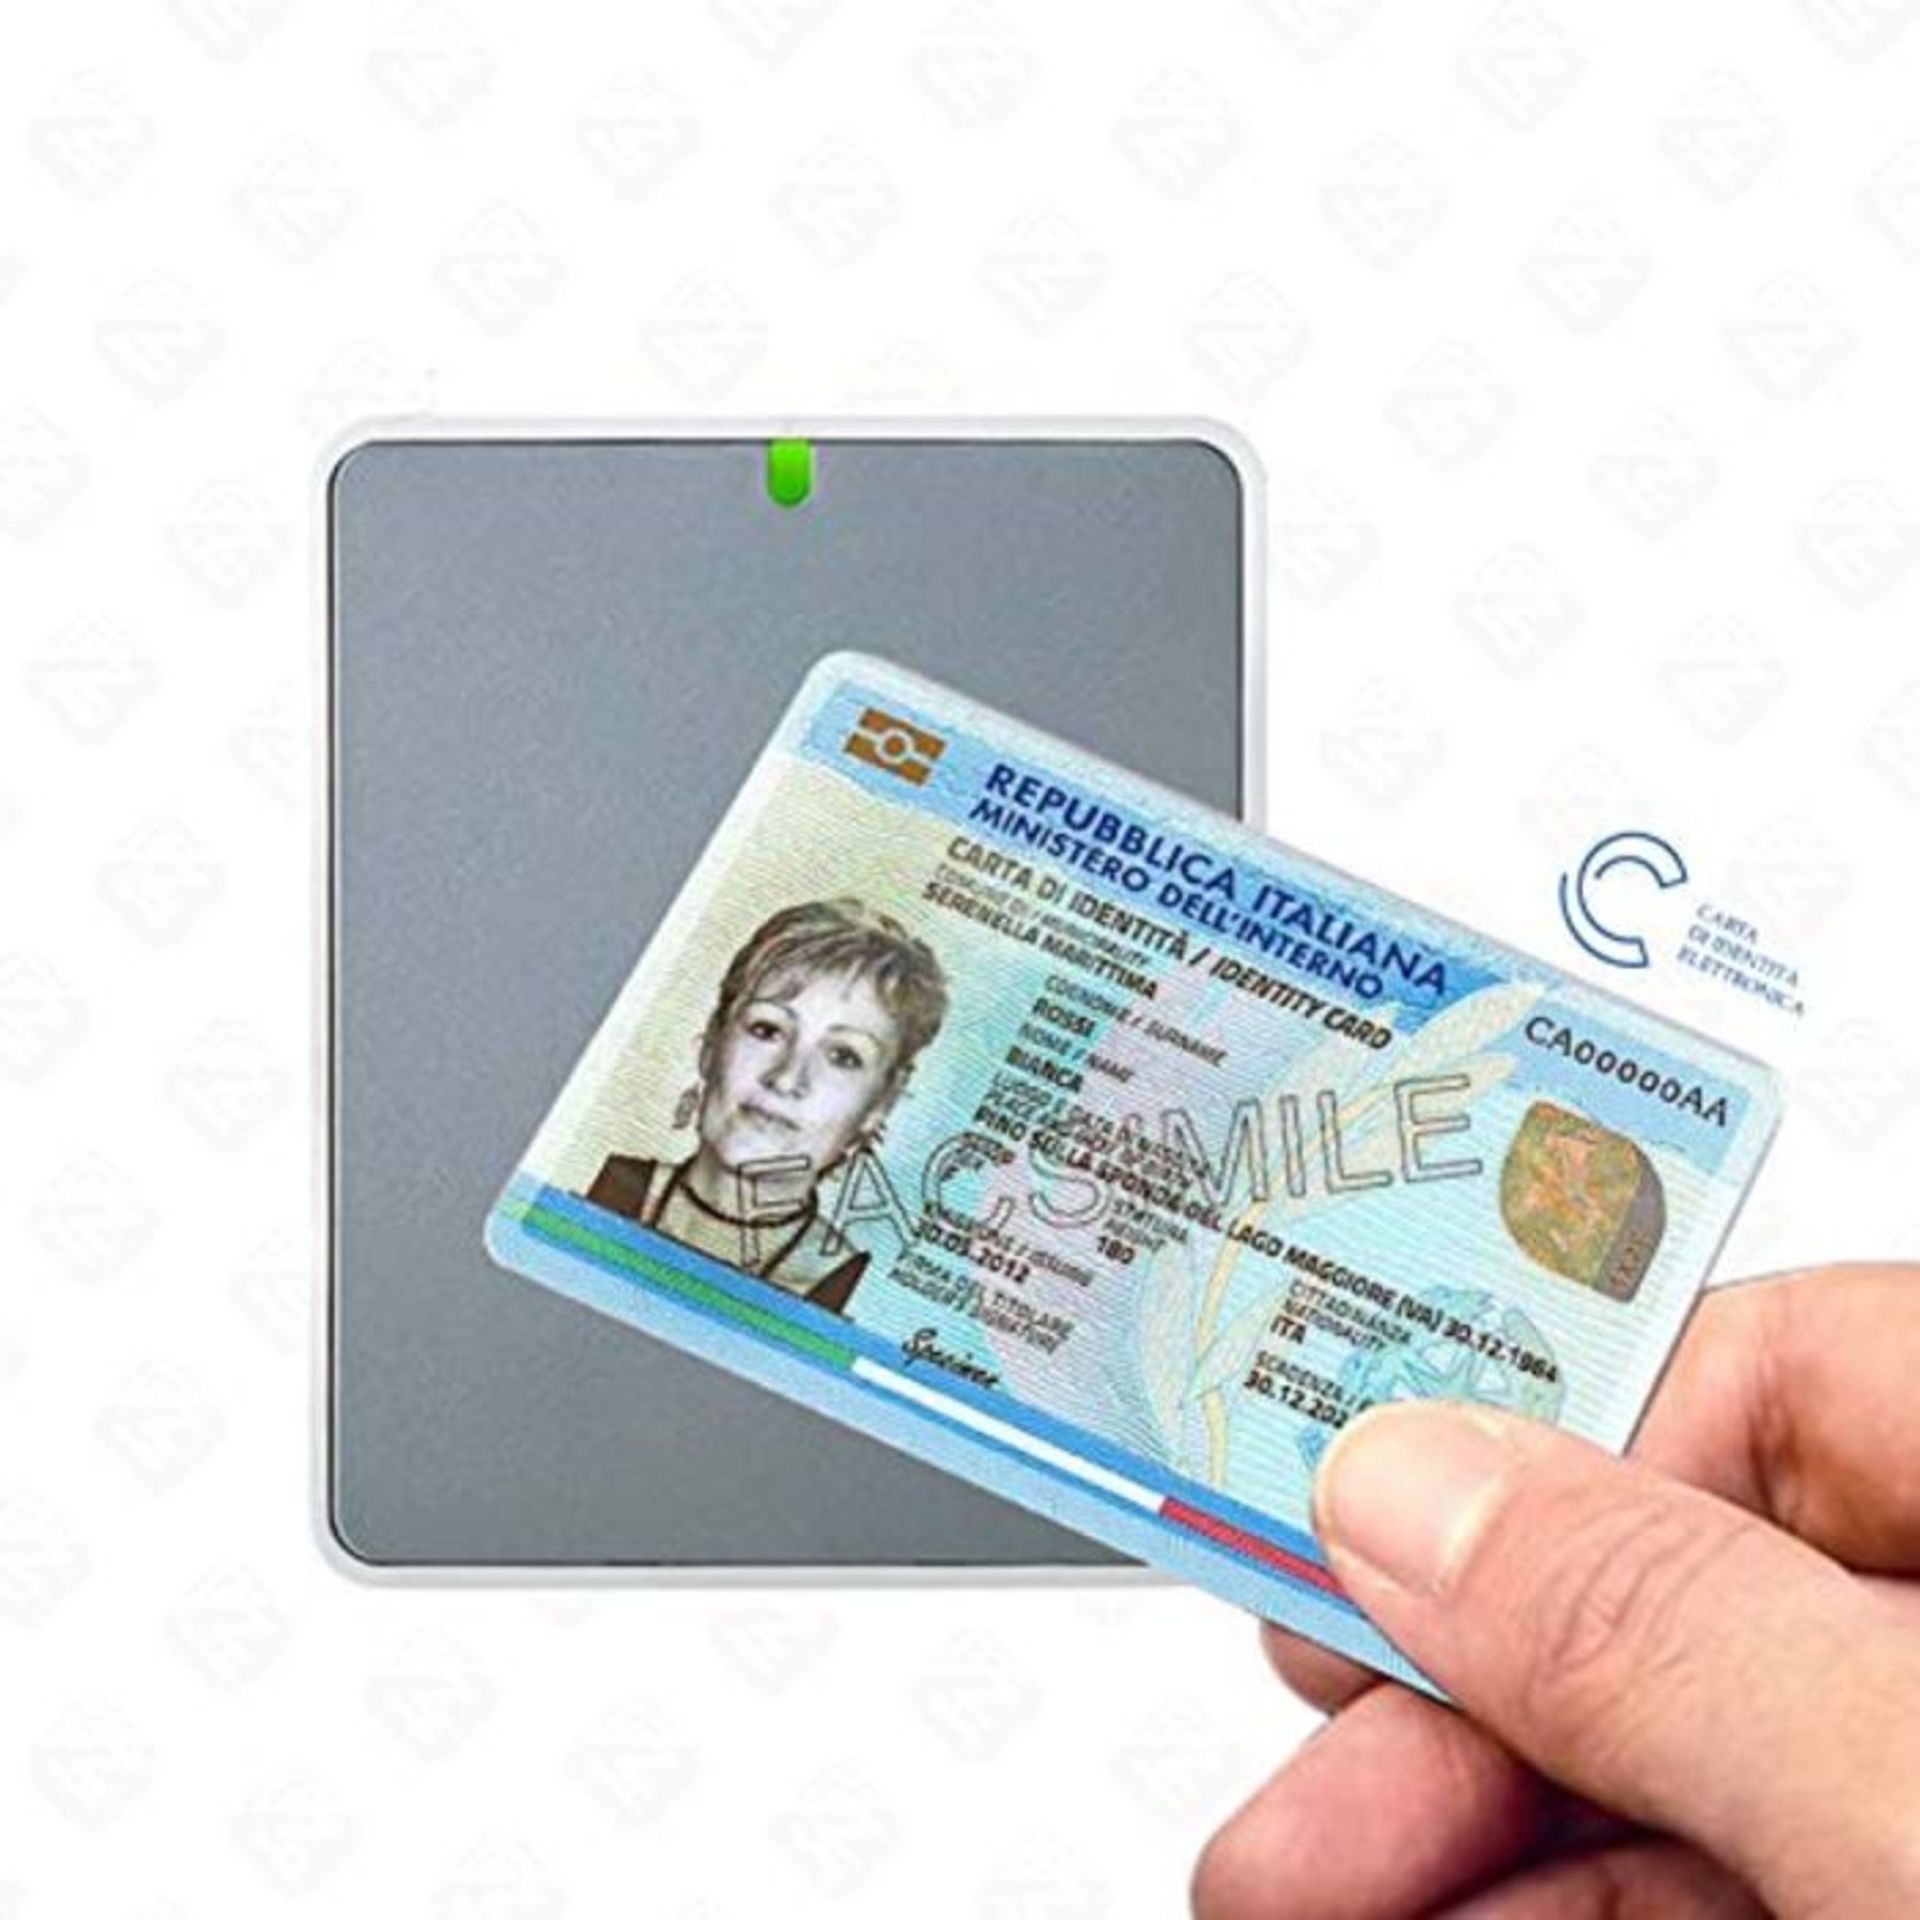 Identiv uTrust 3700F CIE Electronic ID Card Reader